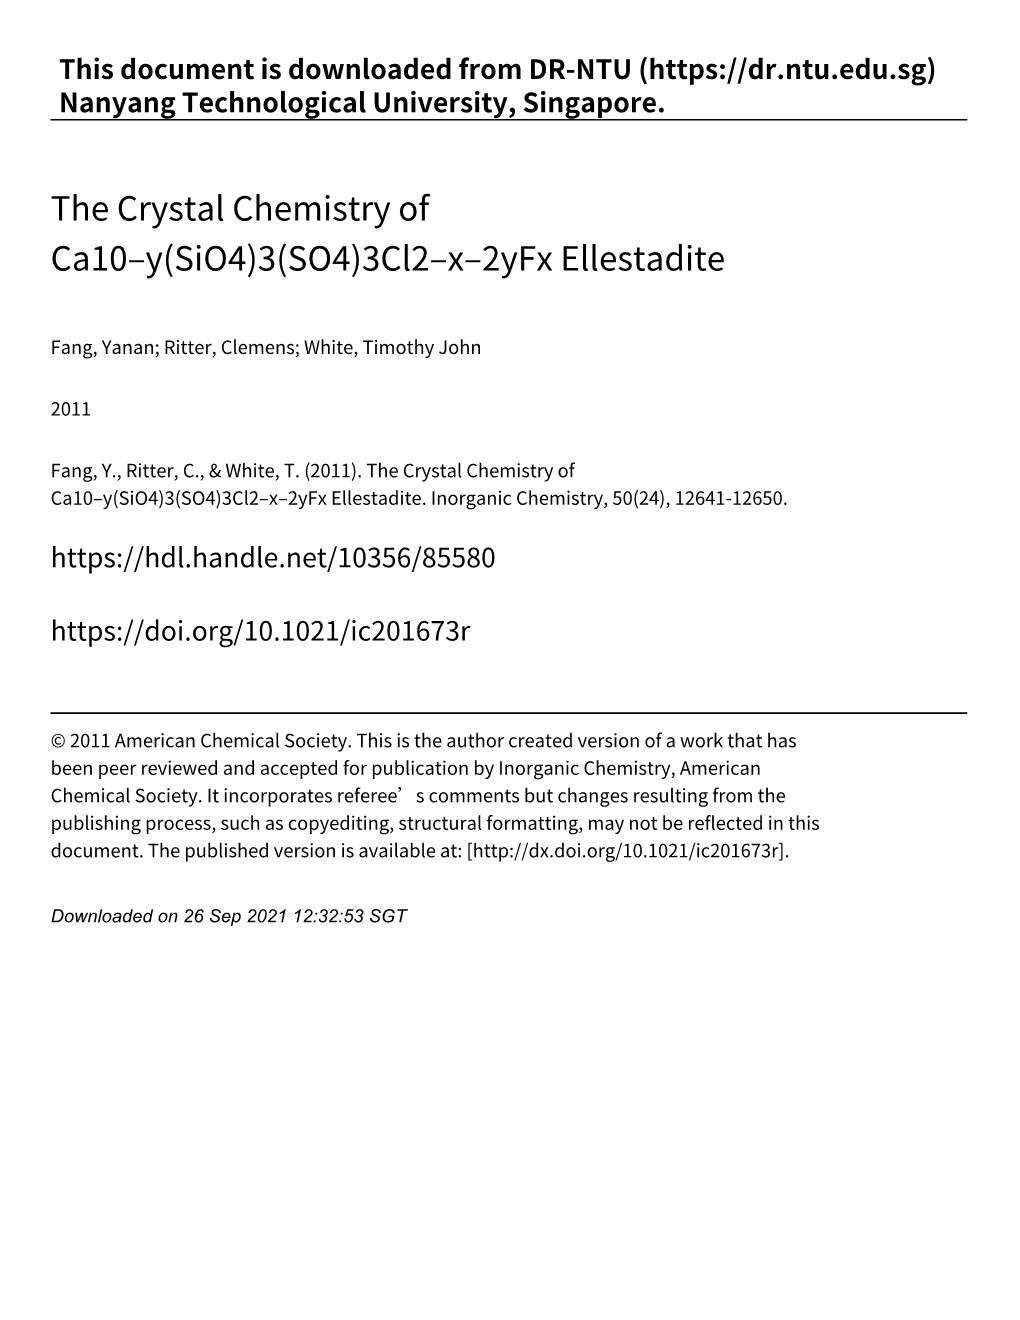 The Crystal Chemistry of Ca10–Y(Sio4)3(SO4)3Cl2–X–2Yfx Ellestadite